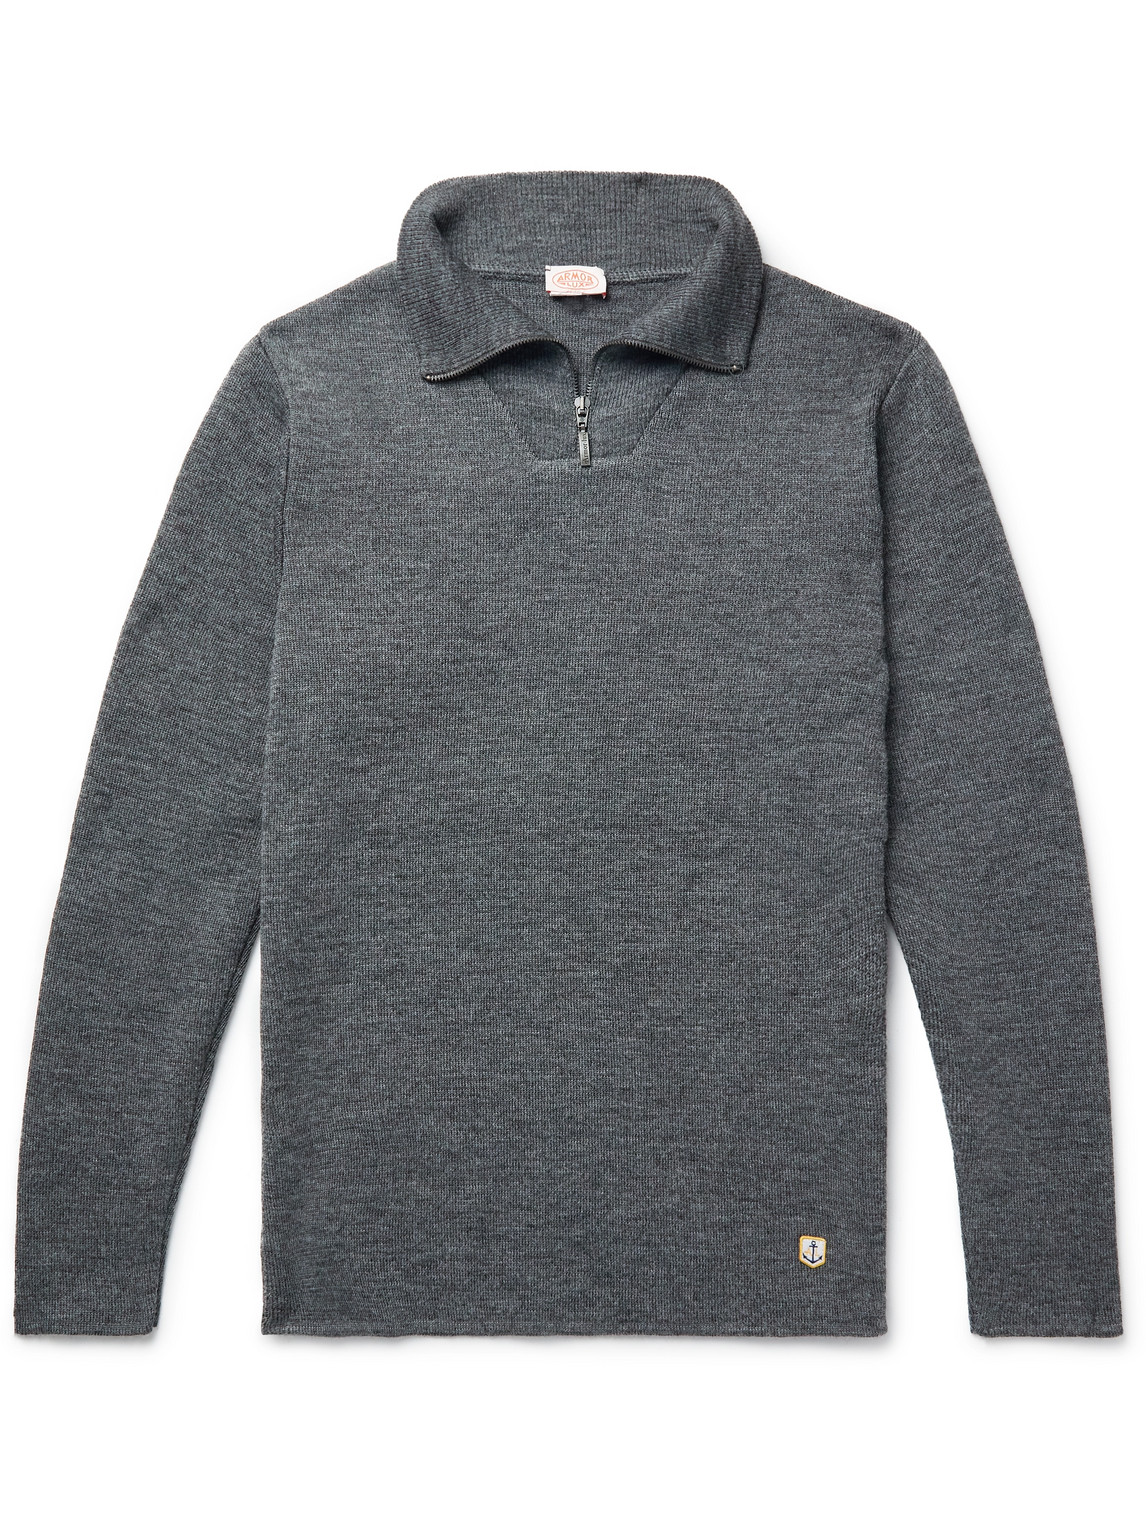 Armor-lux Guisseny Slim-fit Logo-appliquéd Wool Half-zip Sweater In Gray